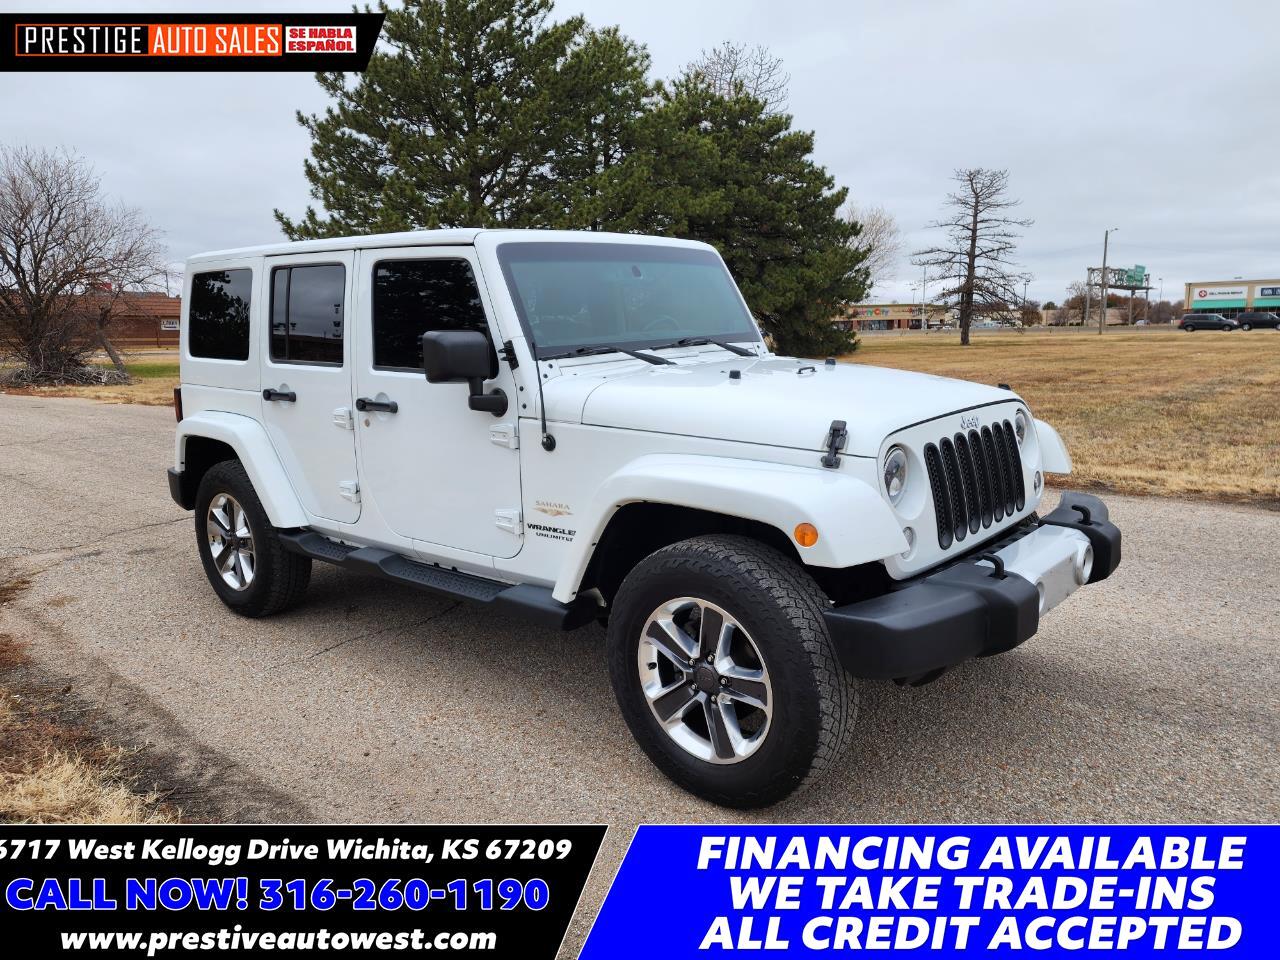 Used 2014 Jeep Wrangler Unlimited Sahara 4WD for Sale in Wichita KS 67209  Prestige Auto Sales - West